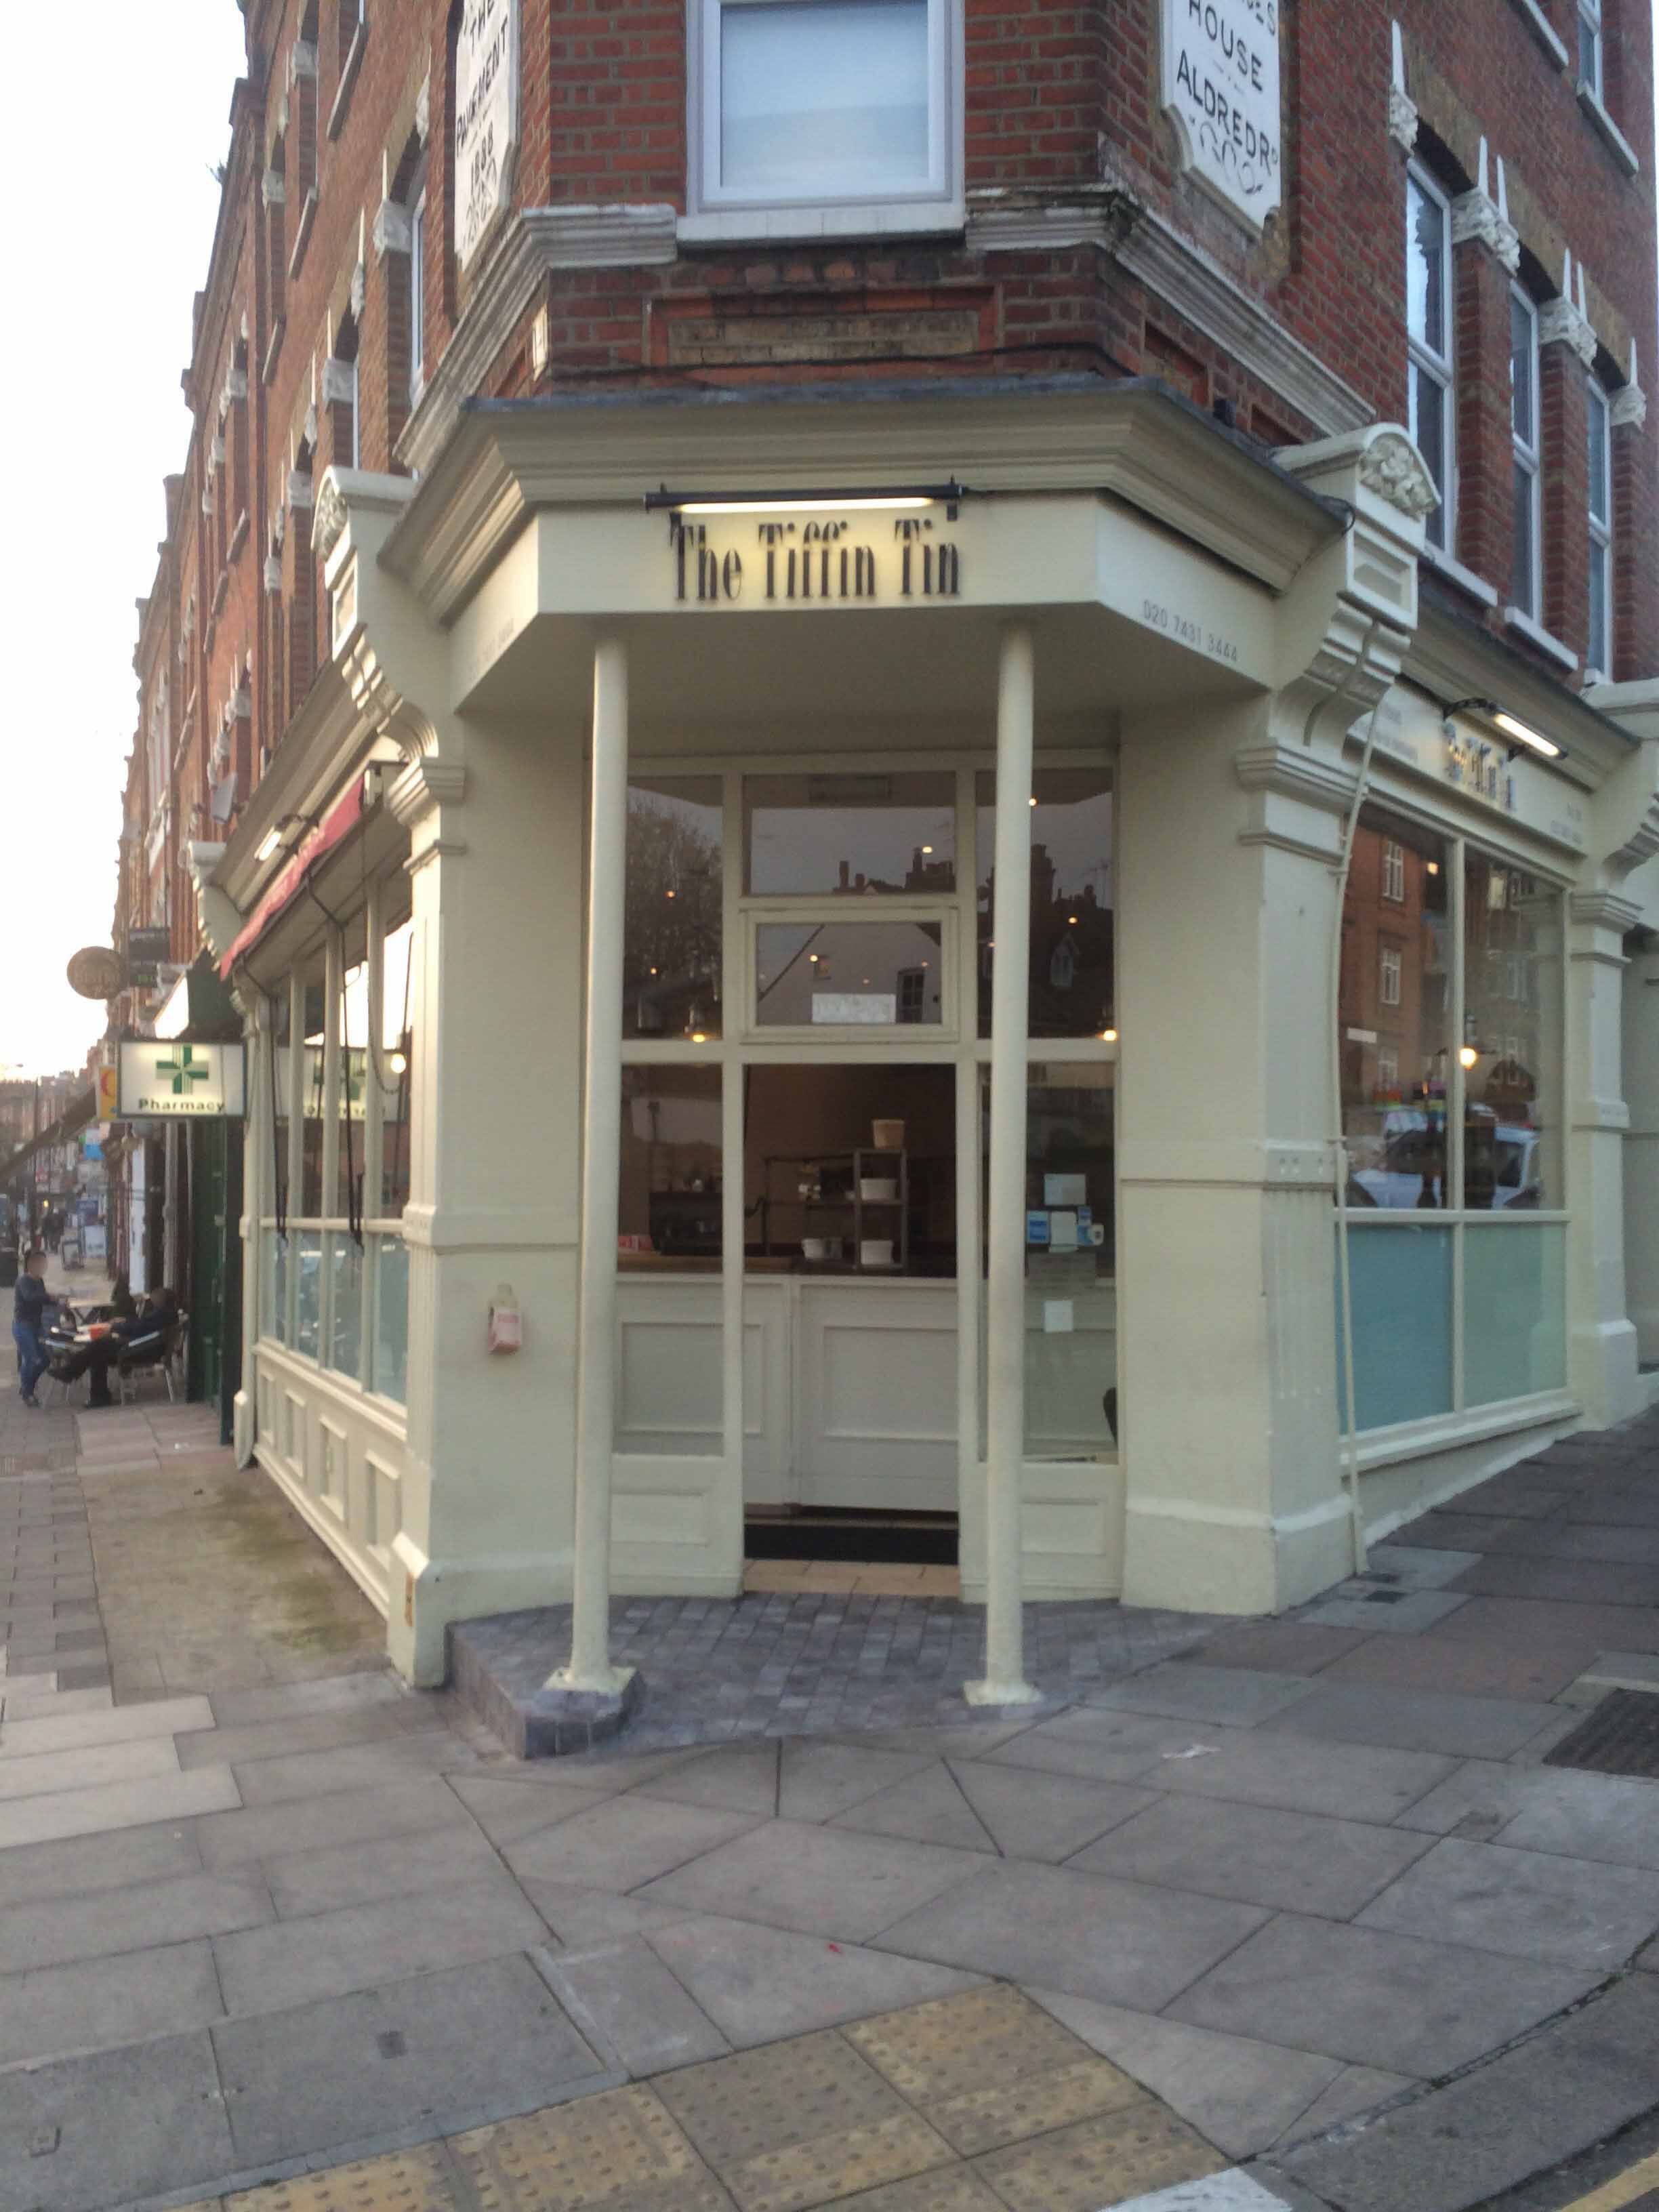 Menu of The Tiffin Tin, West Hampstead, London